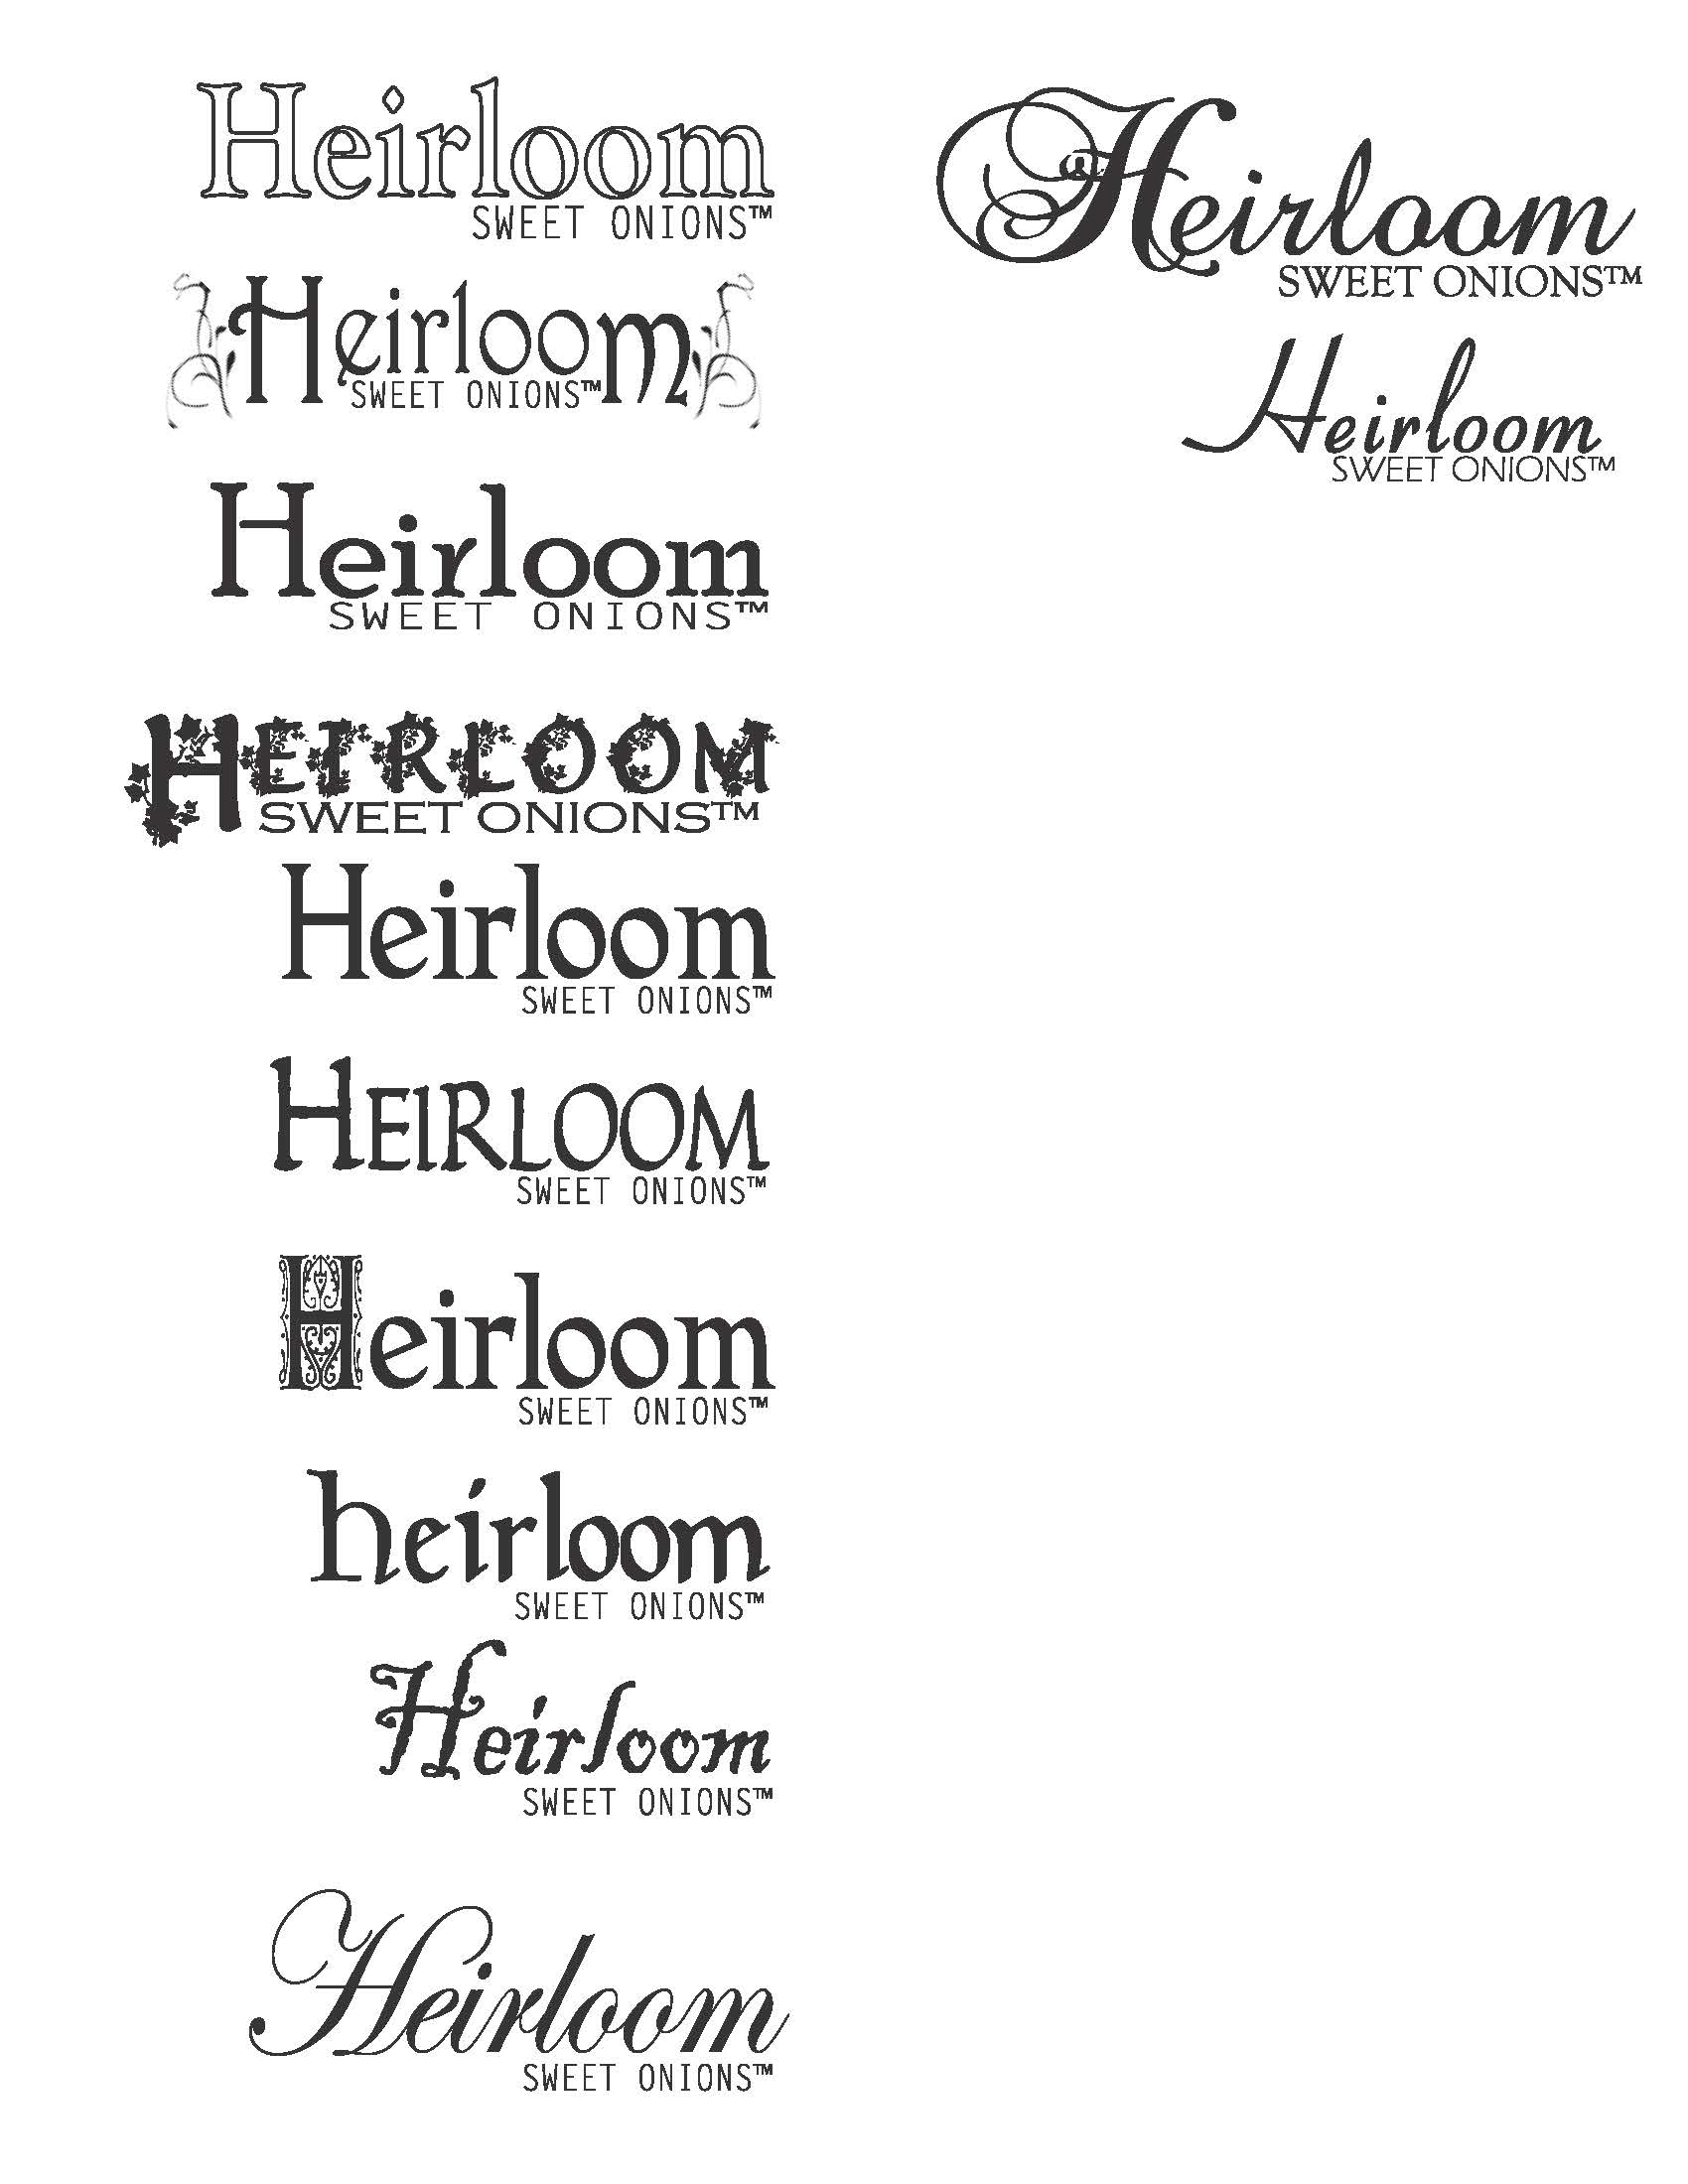 Heirloom Brand Logos